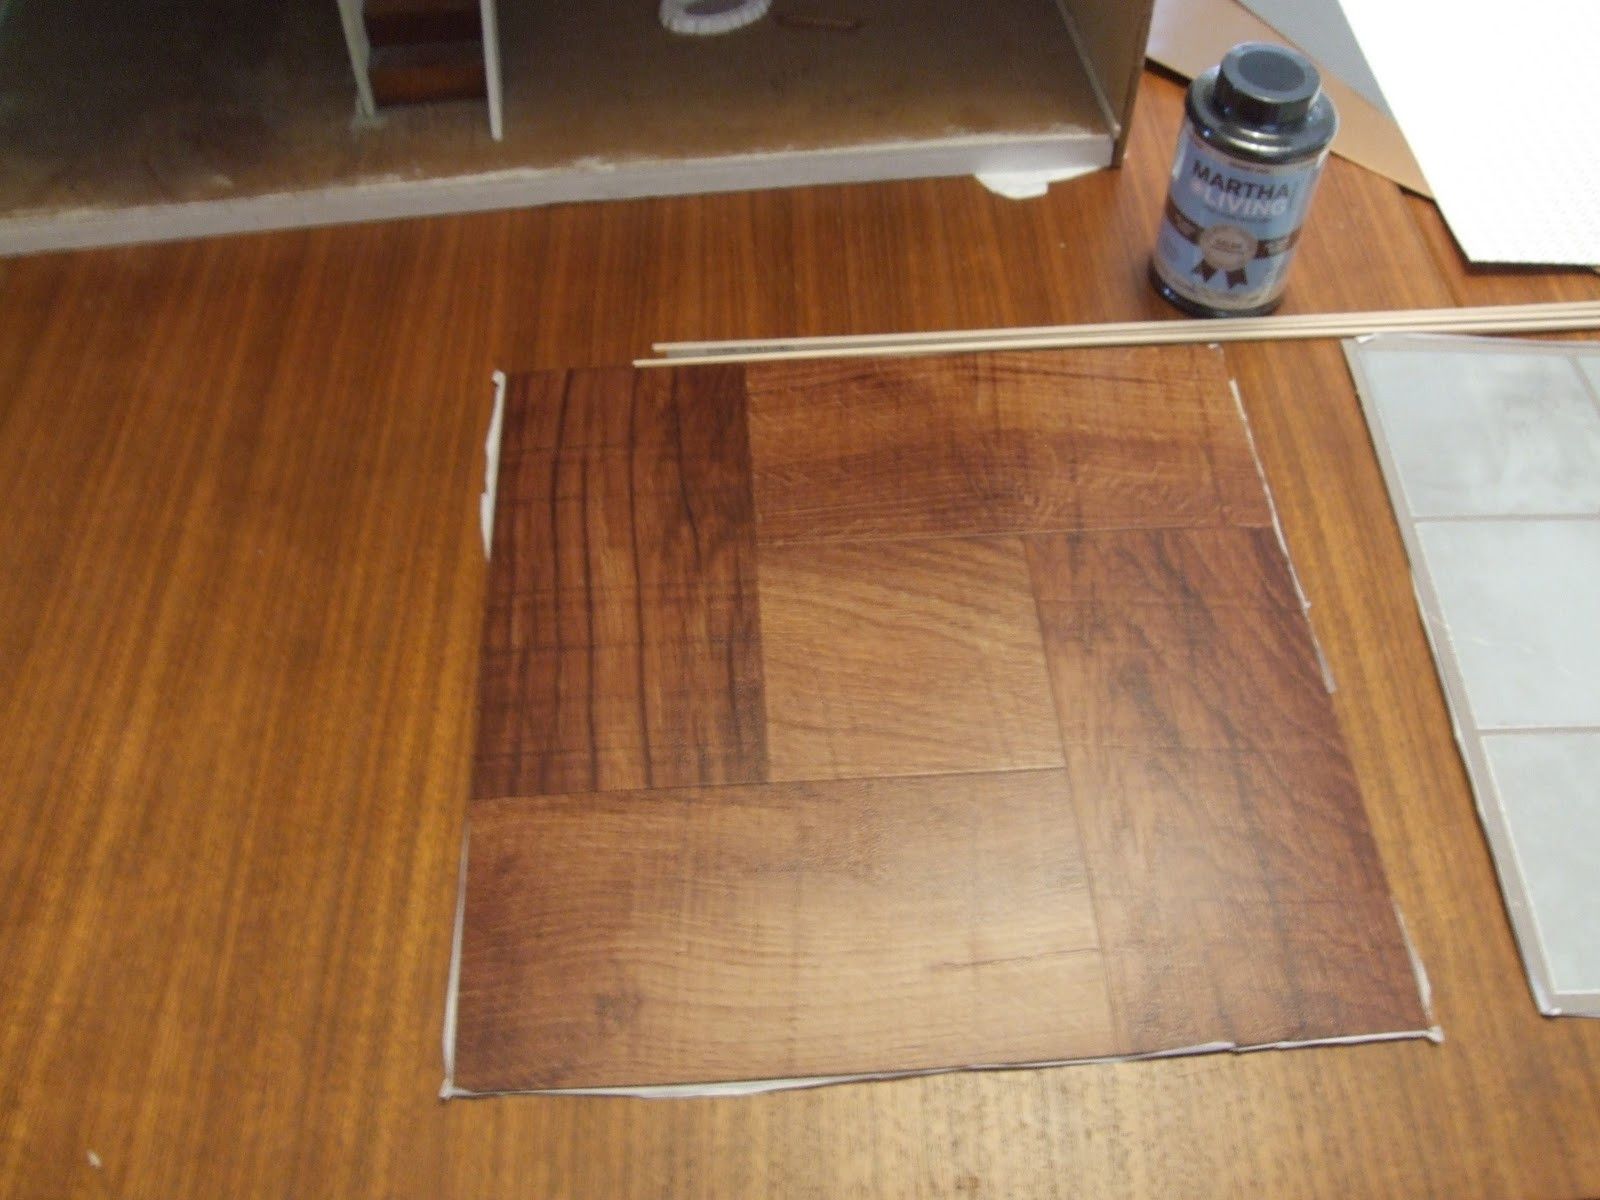 Best ideas about DIY Flooring Tiles
. Save or Pin DIY hardwood dollhouse flooring from vinyl tiles Now.